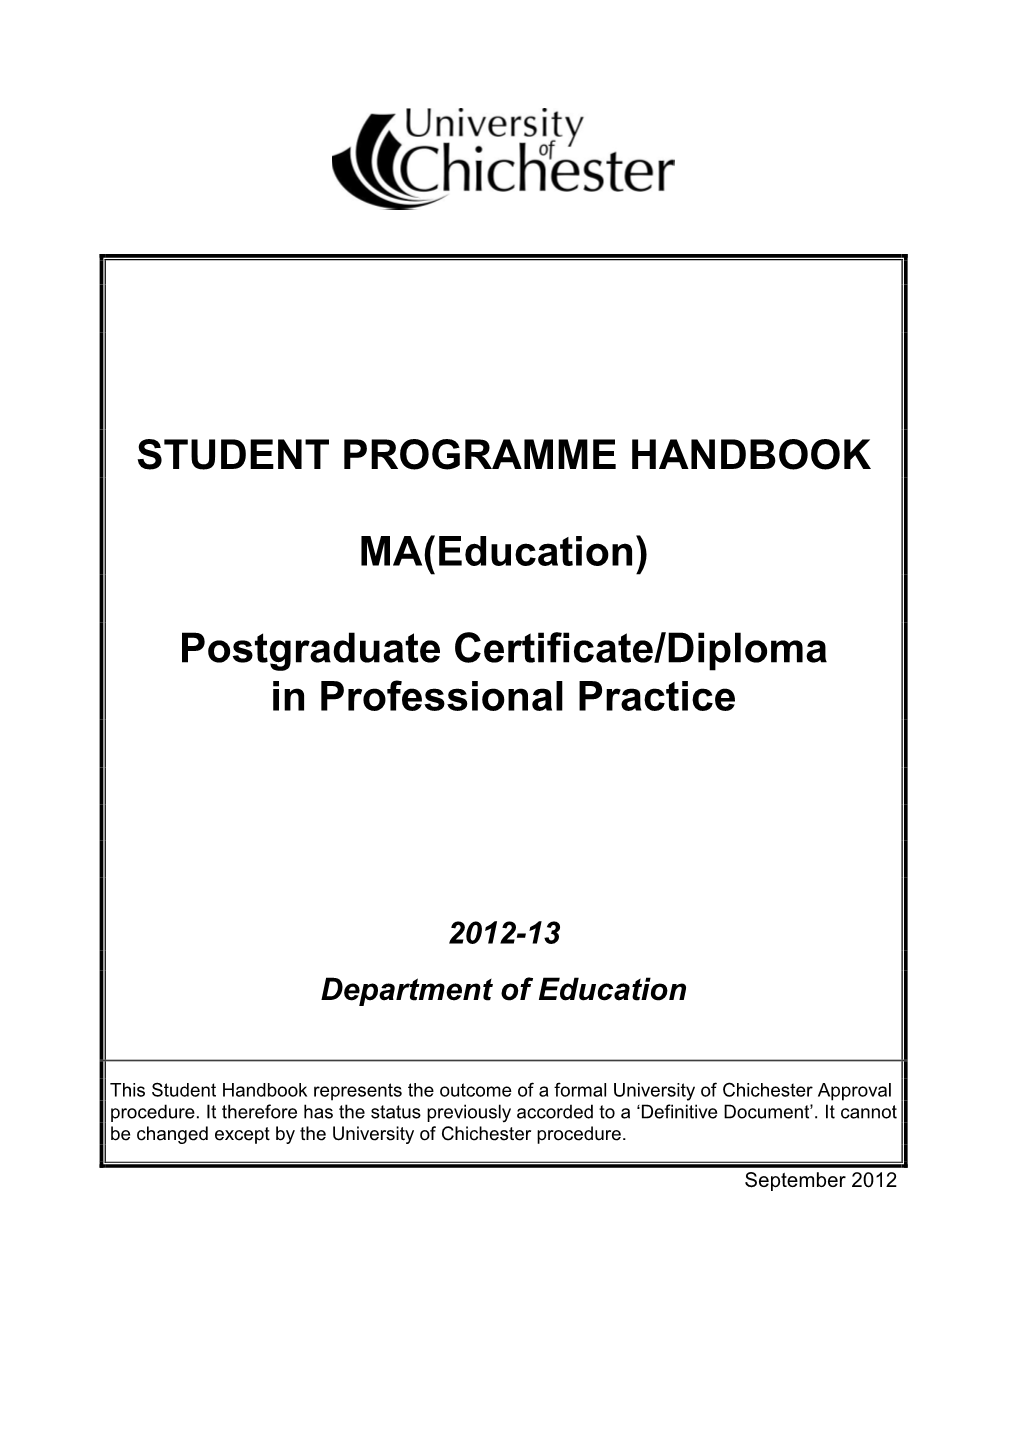 Ma Handbook 94-95